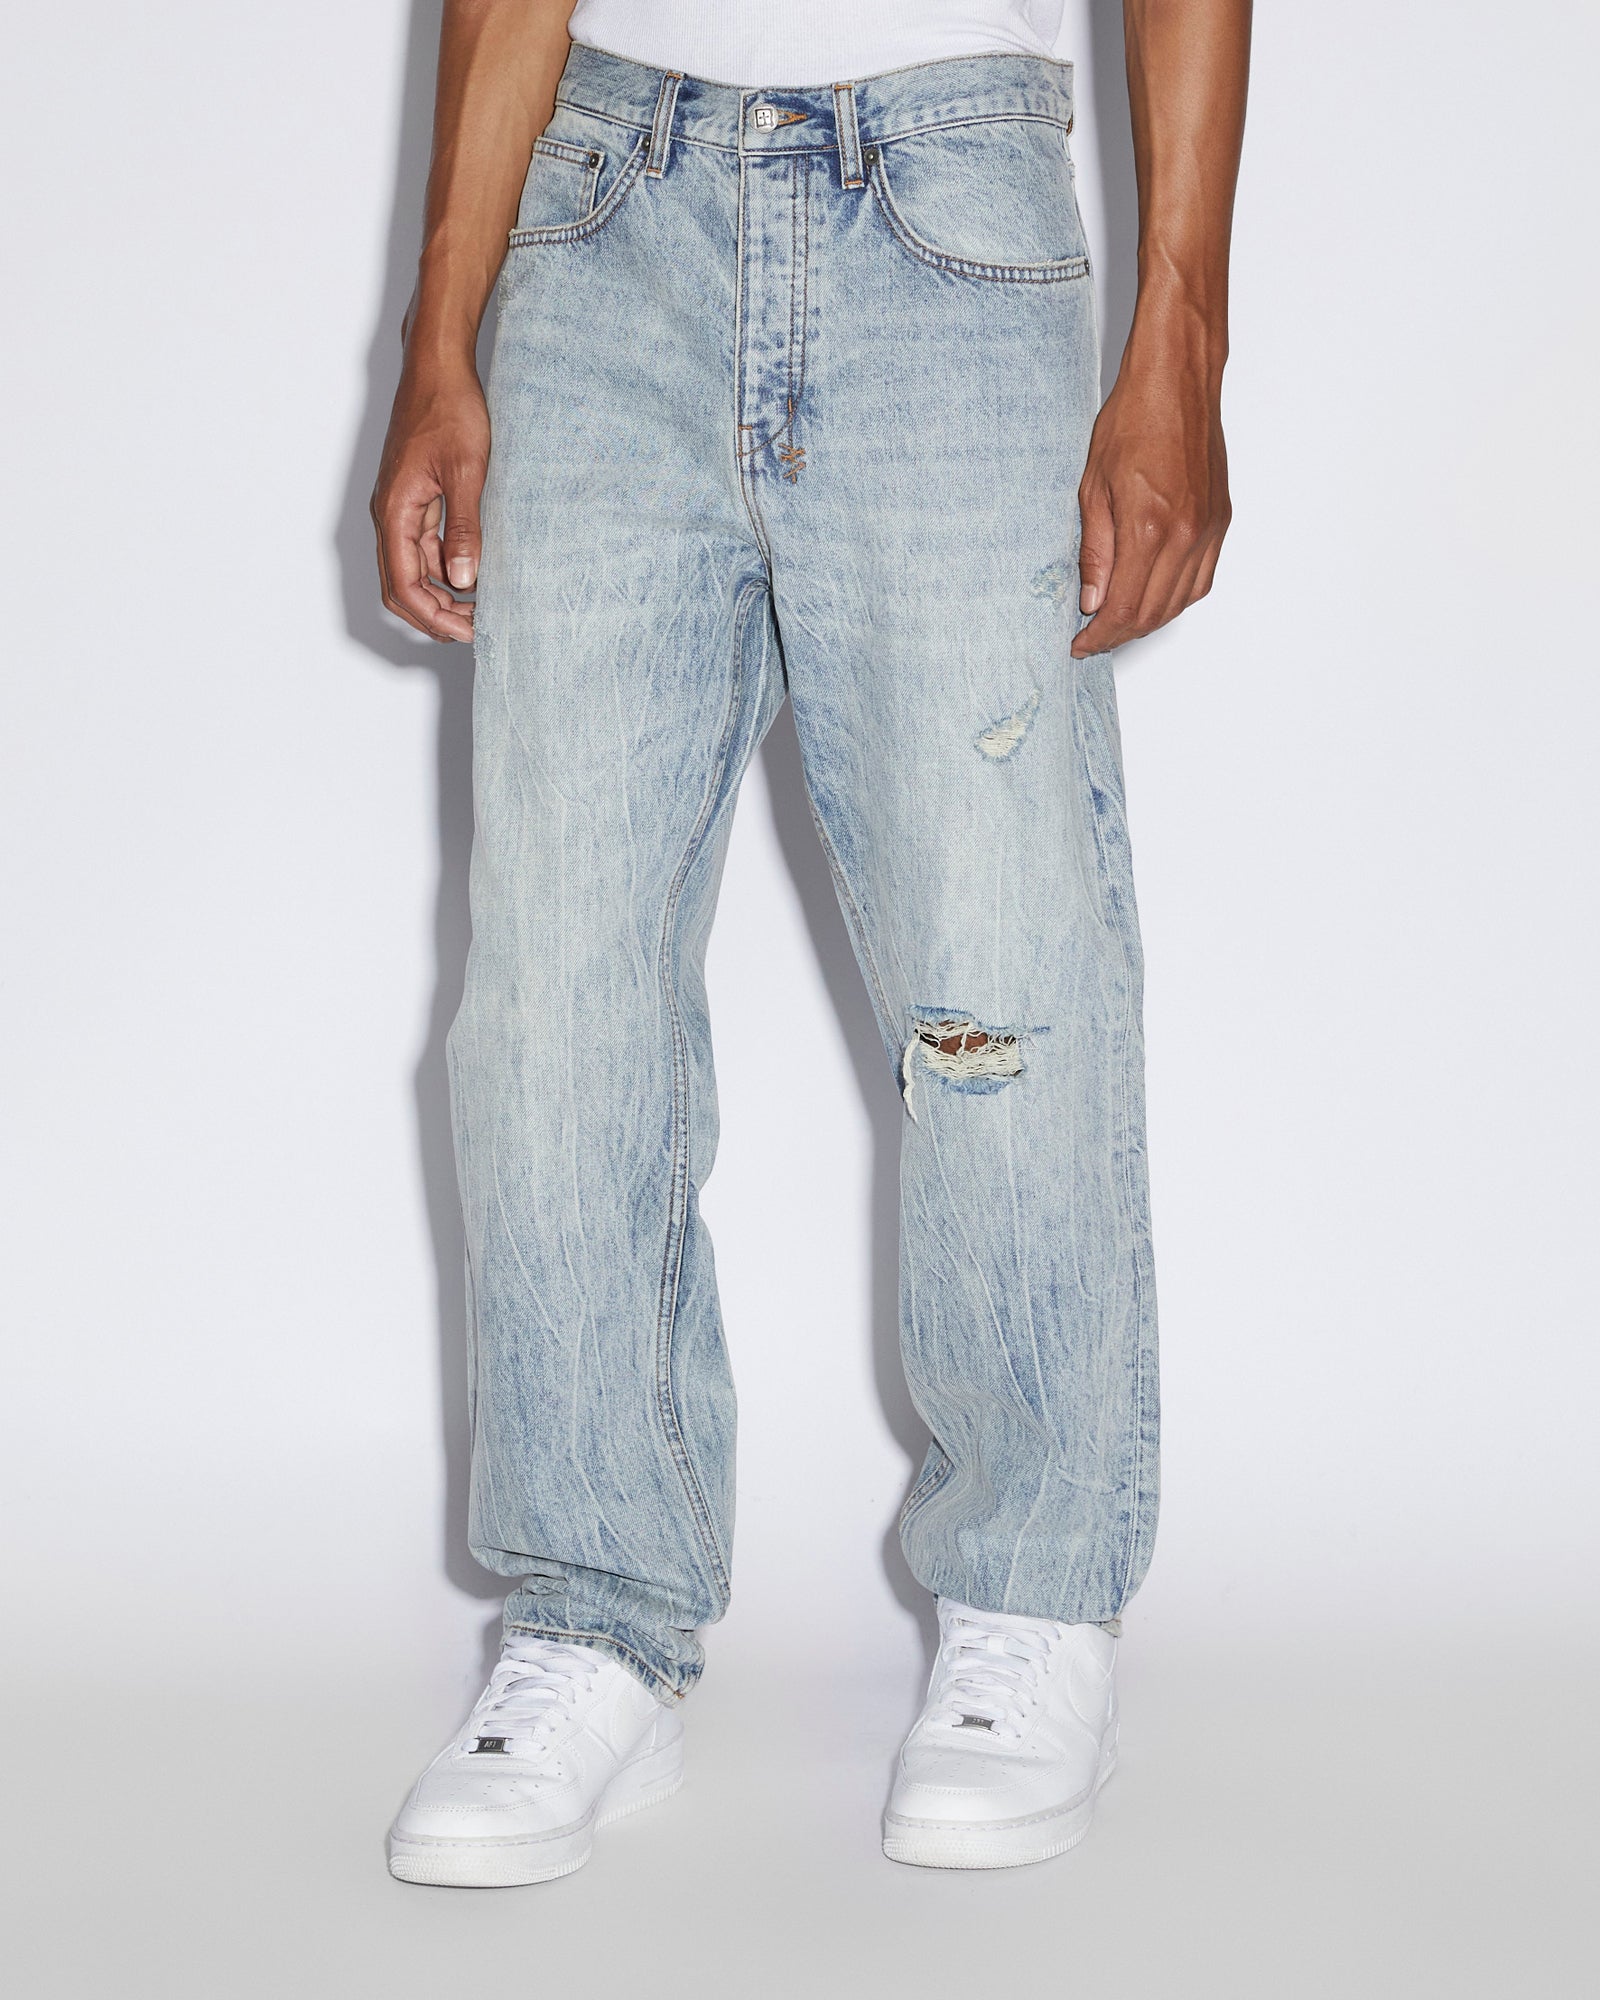 Men's Fashion Plus-Size Loose Jeans Street Wide Leg Trousers Pants